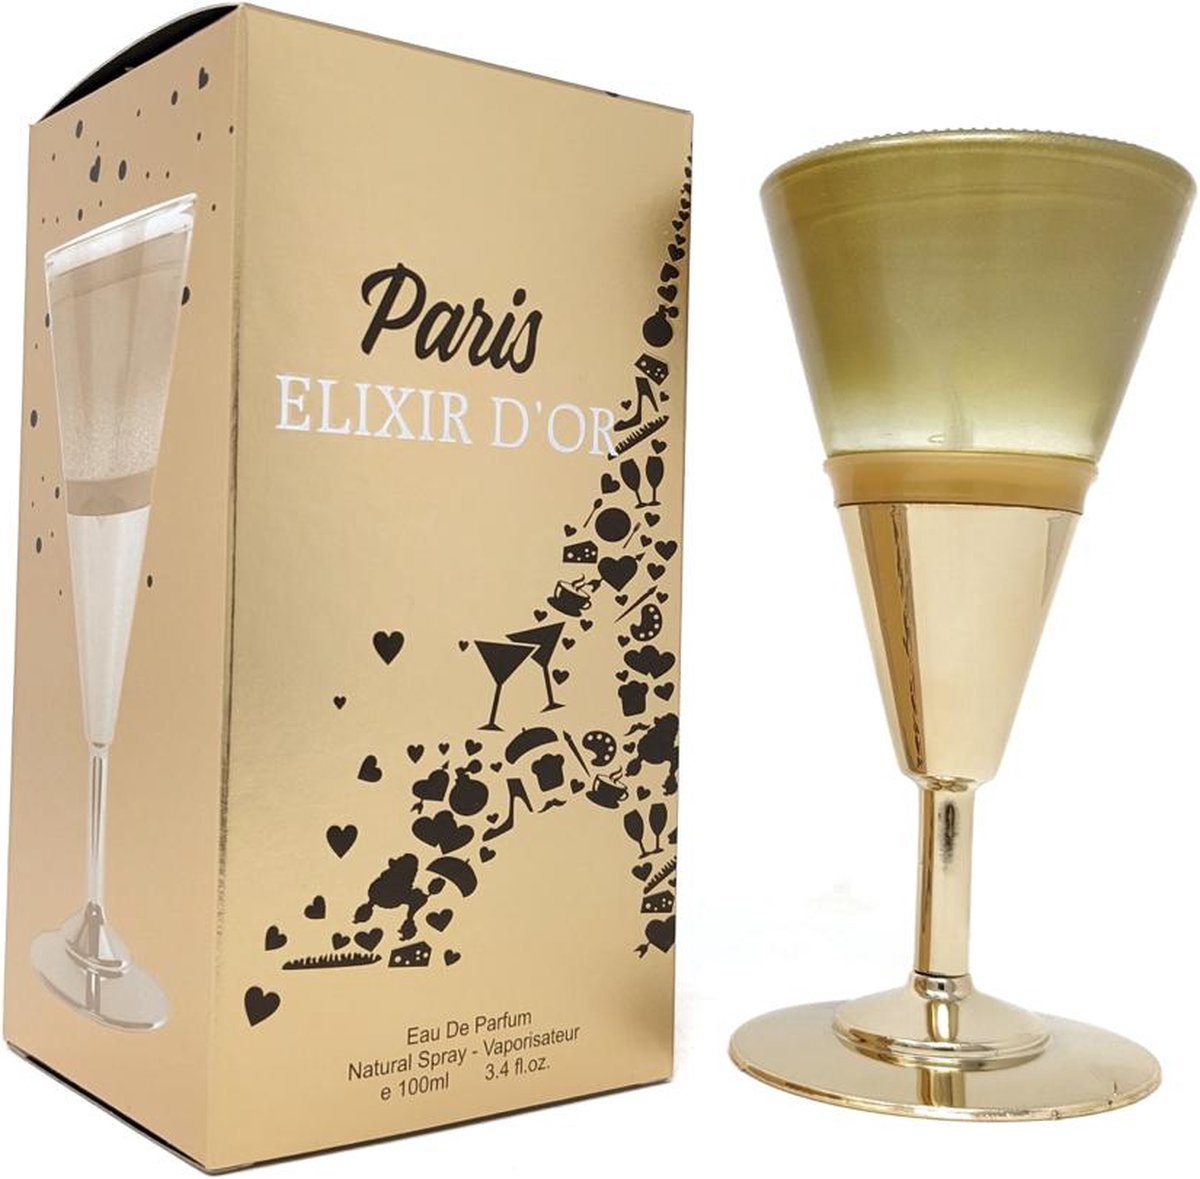 Paris Elixir D'or for women